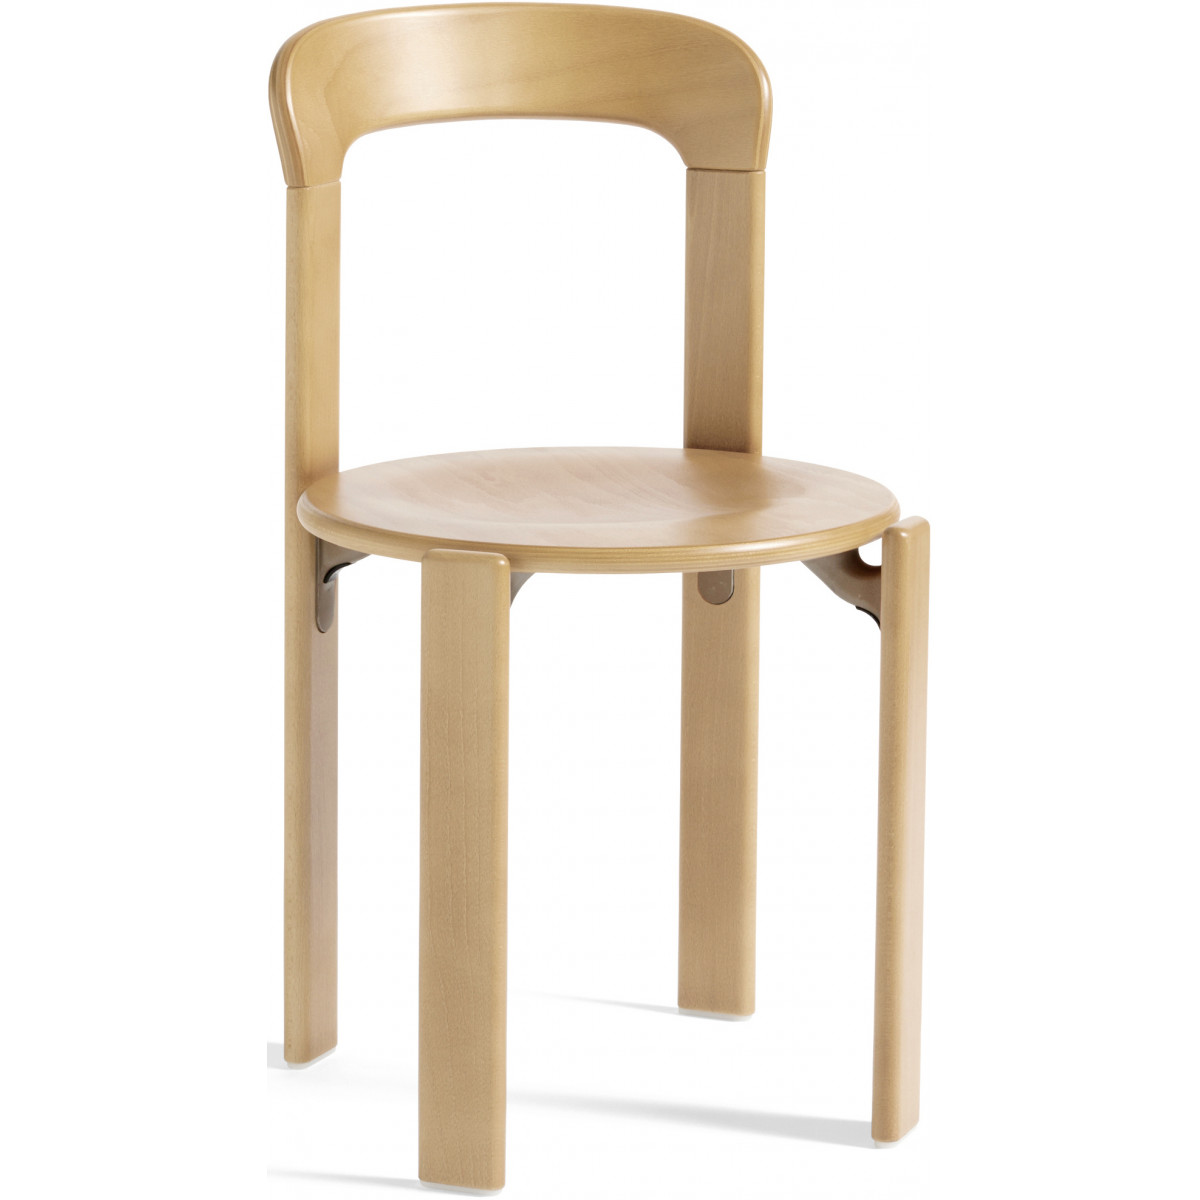 Golden - REY chair